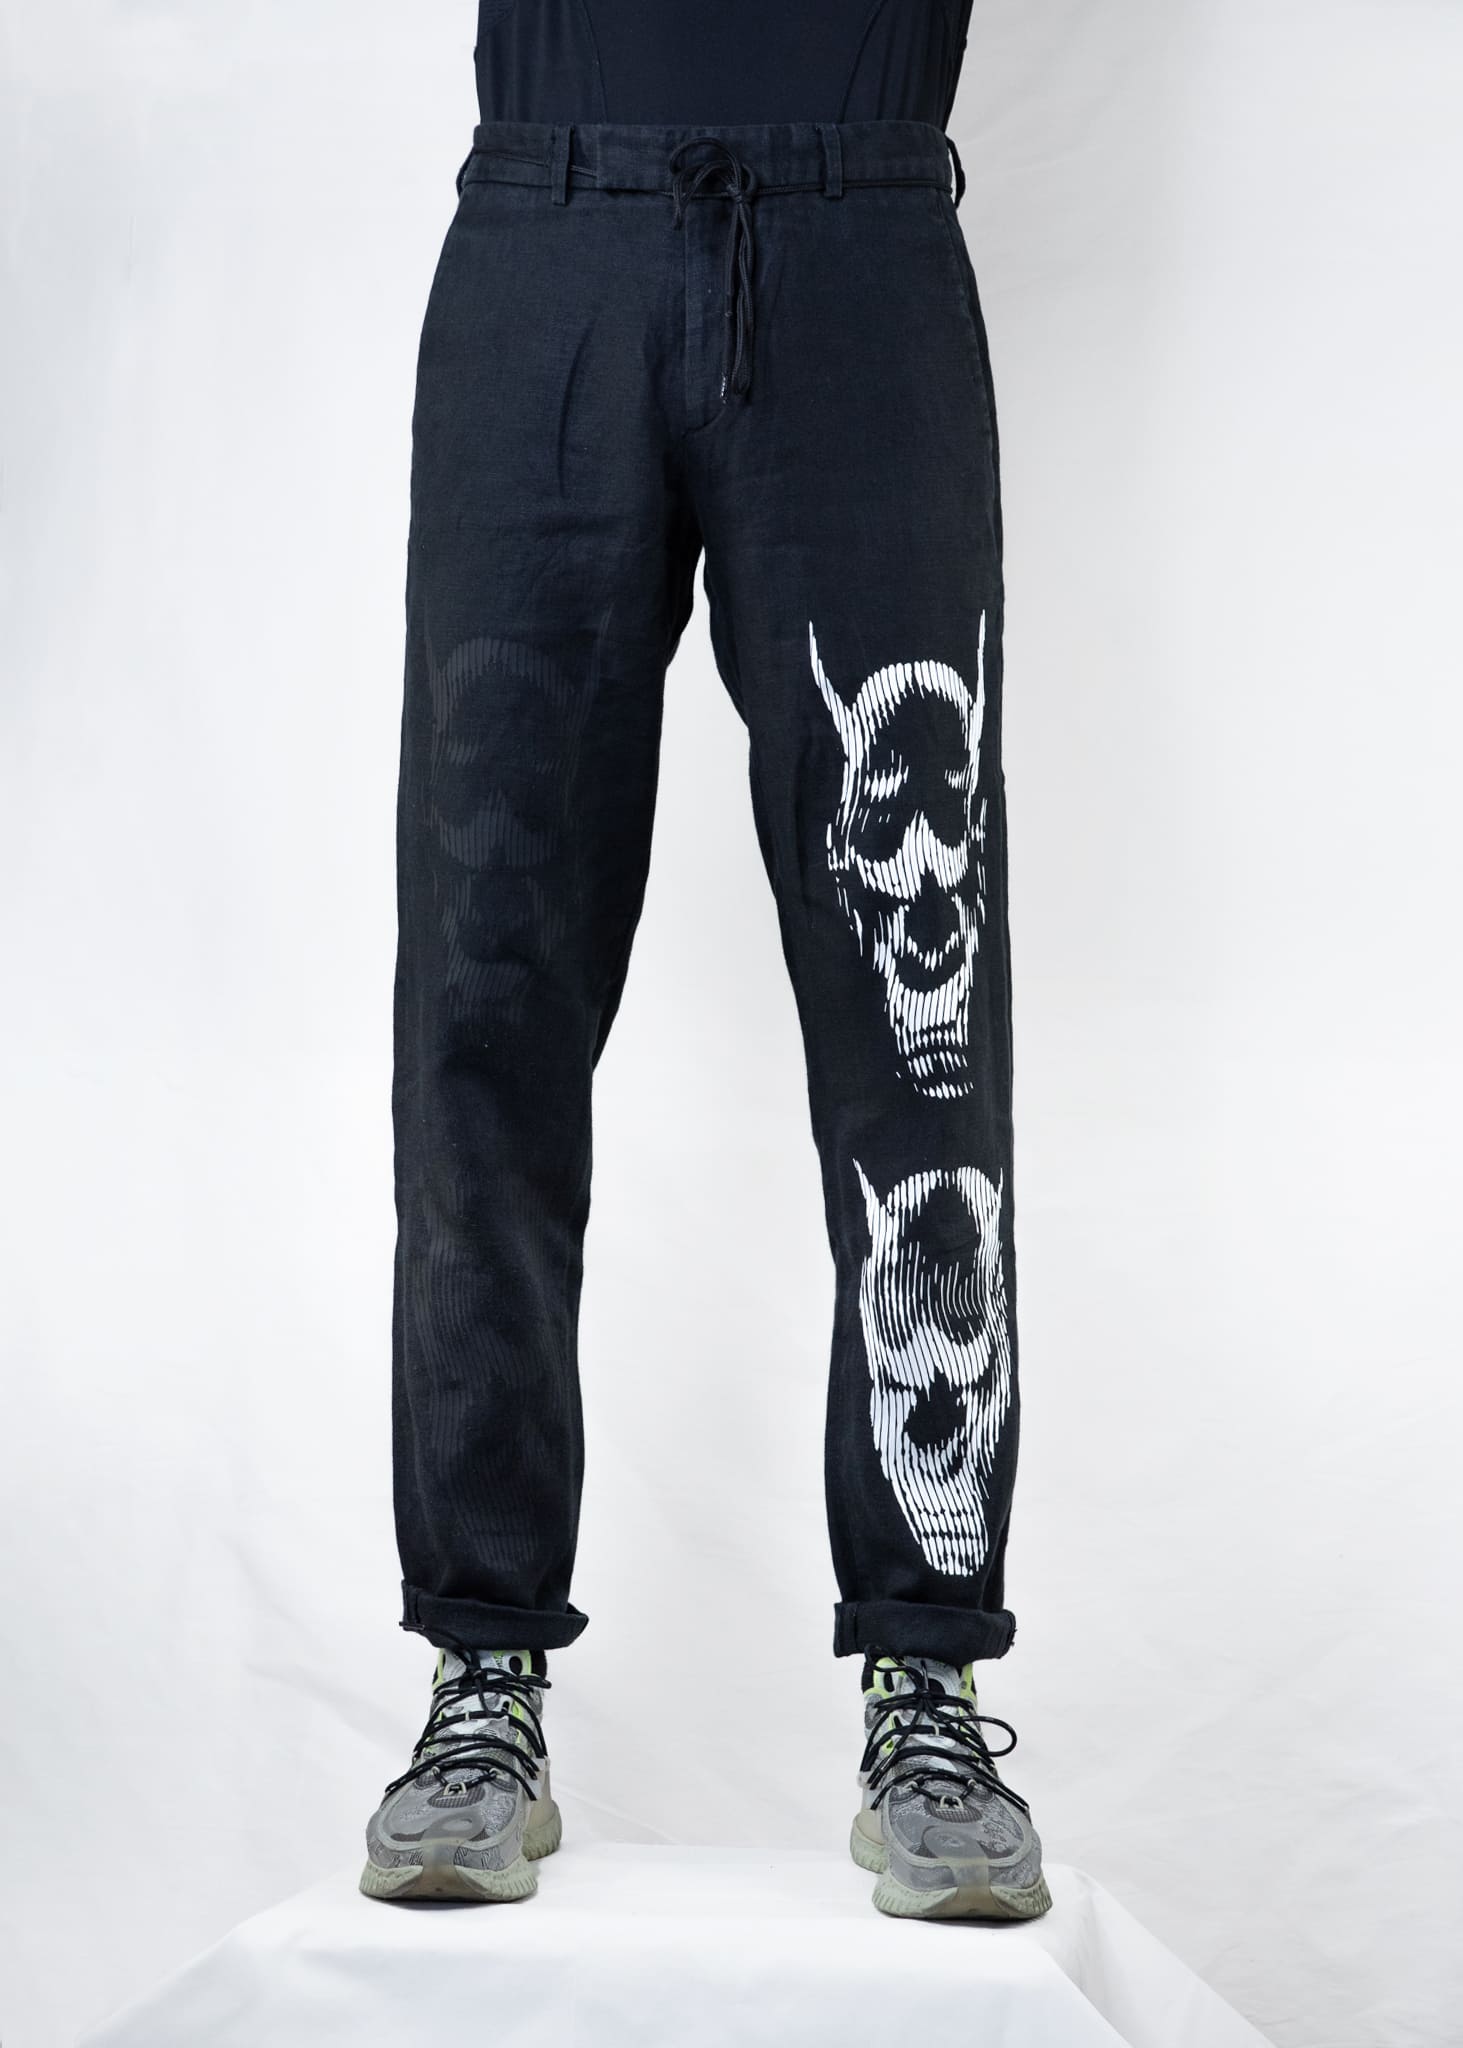 Retinattraktiv pantalon jogging noir imprimé